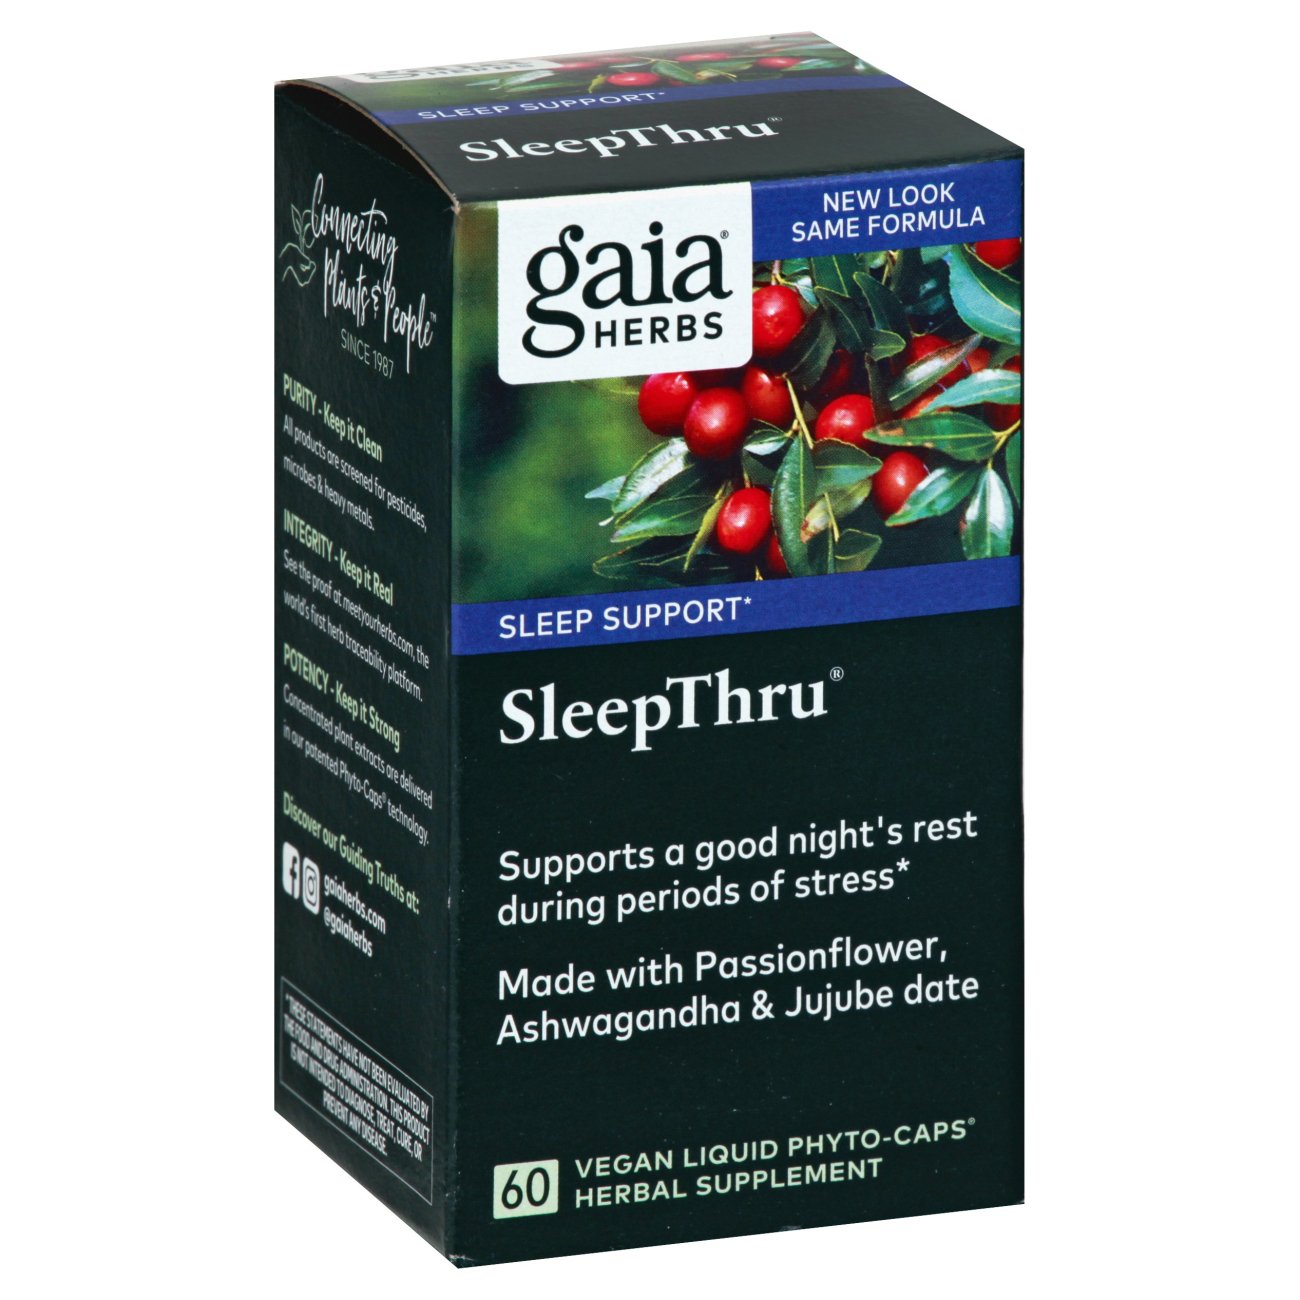 Gaia Herbs Bacopa 60 Vegan Liquid Phyto-Caps